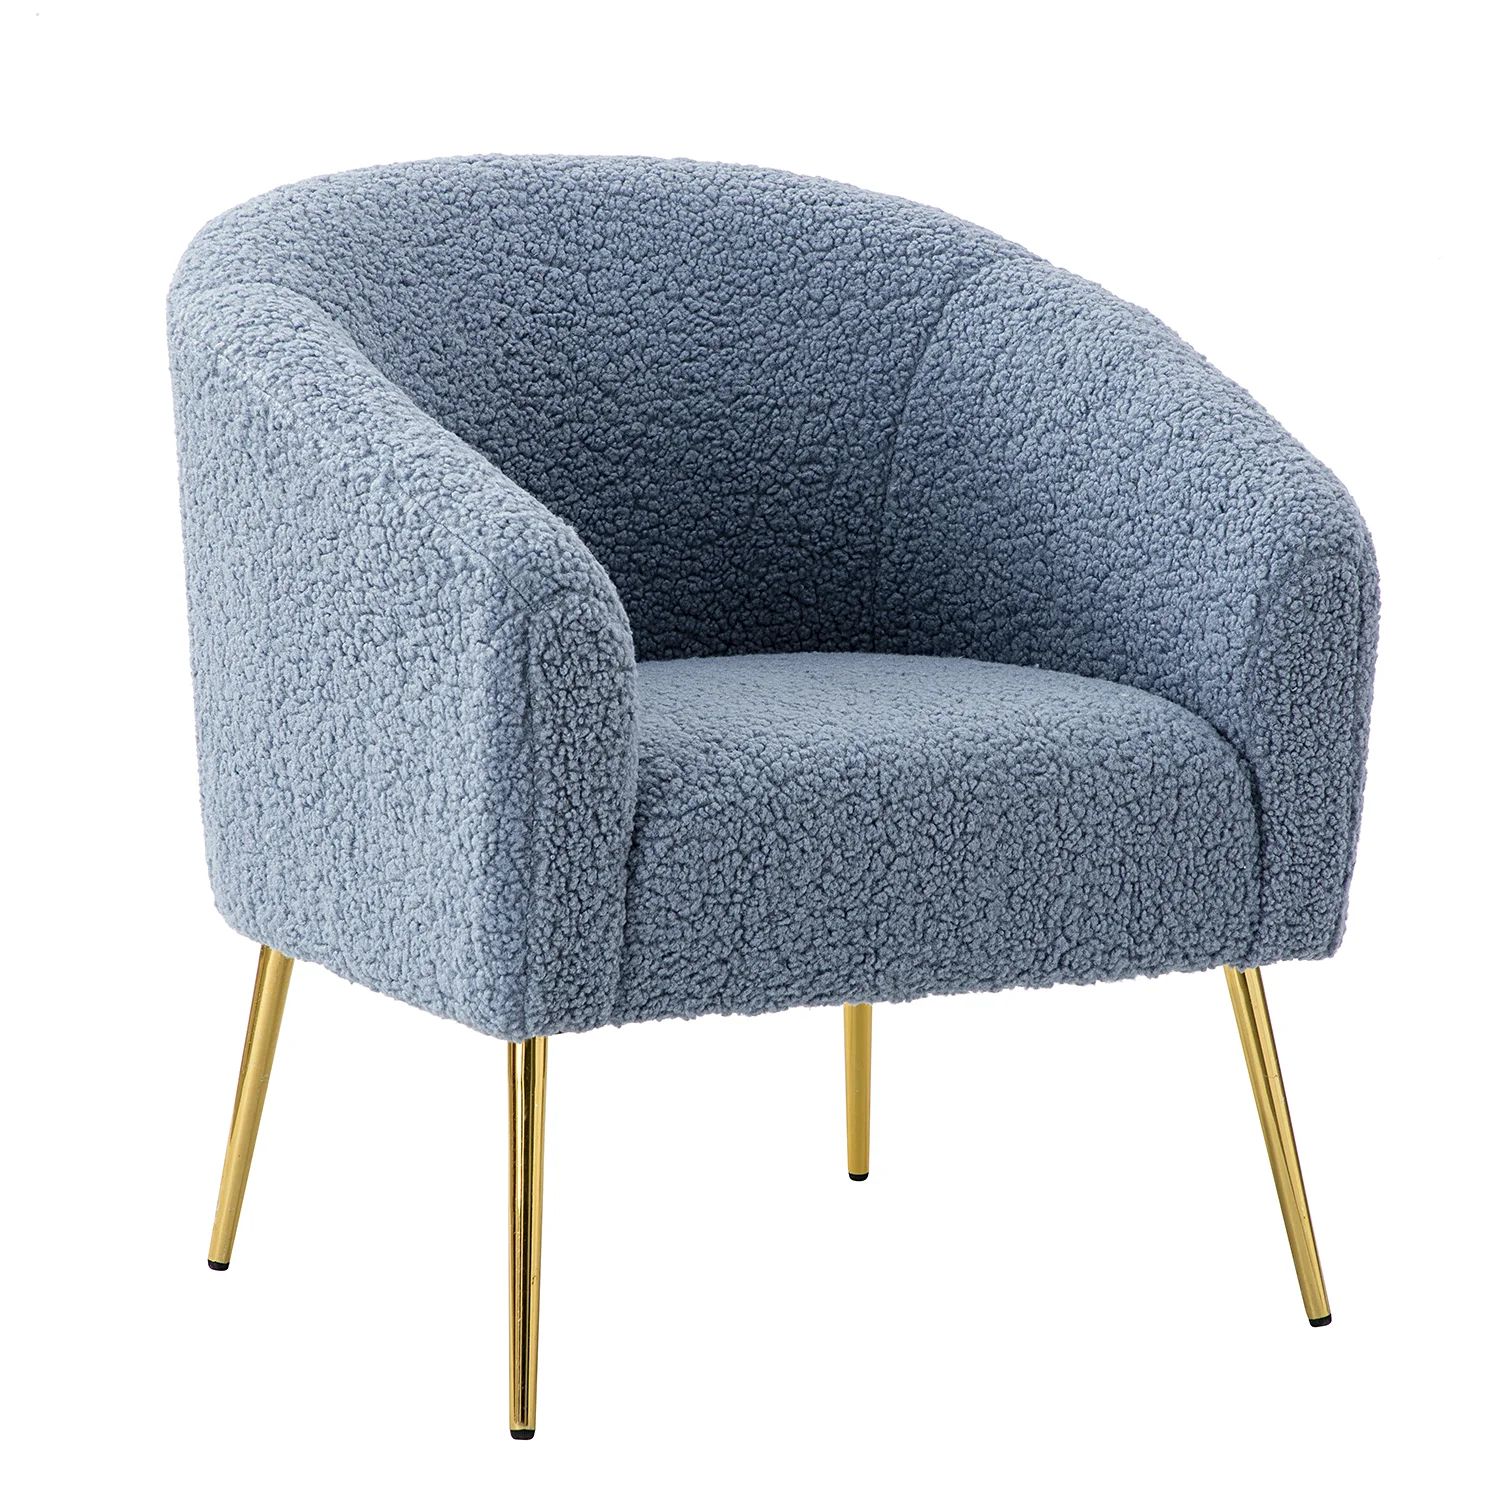 Dawson Upholstered Barrel Chair | Wayfair North America